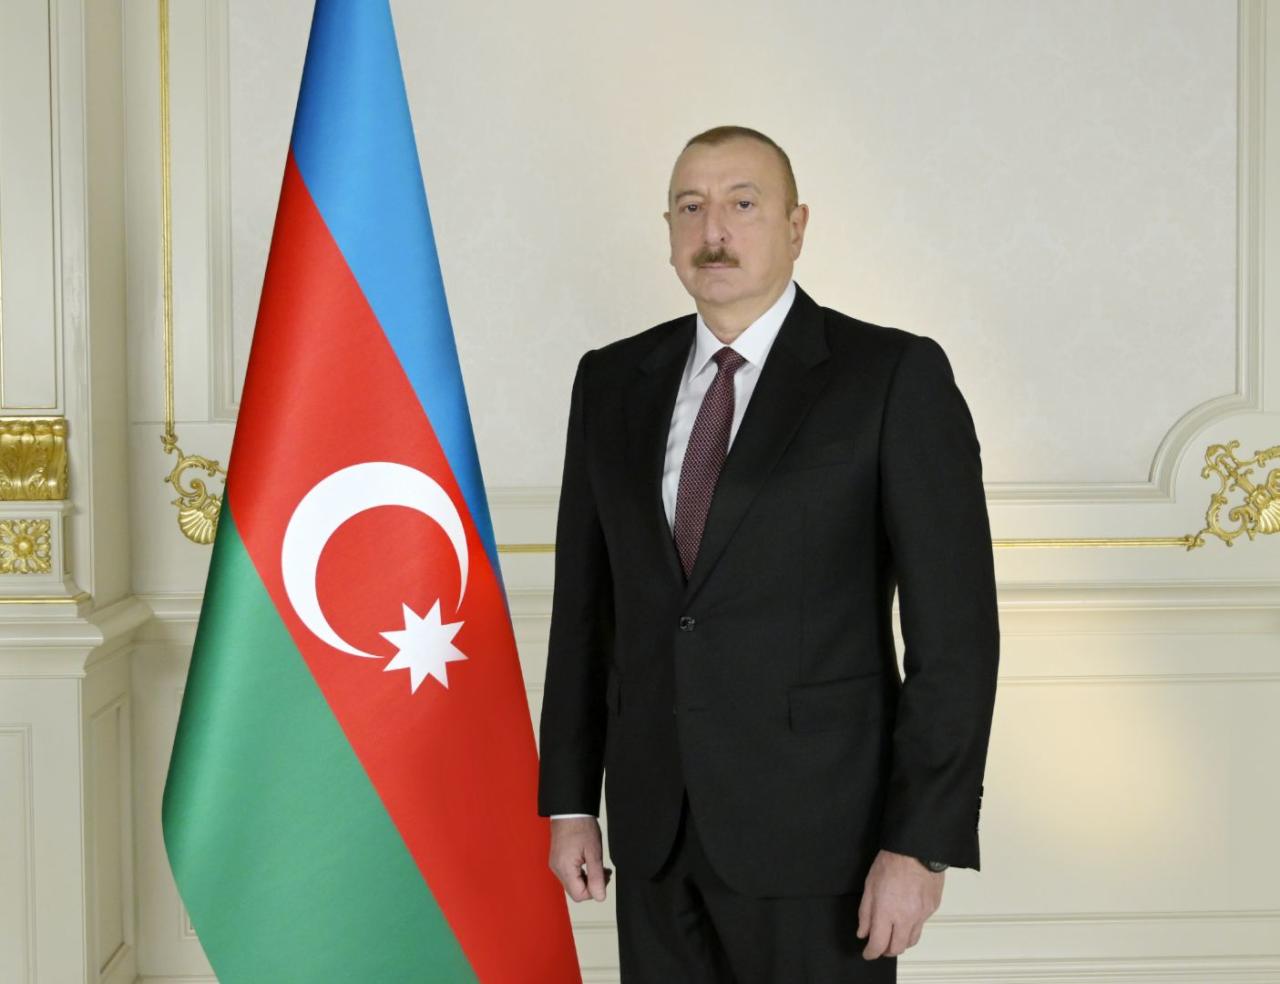 Вернув Карабах, Президент Ильхам Алиев осуществил мечту каждого азербайджанца